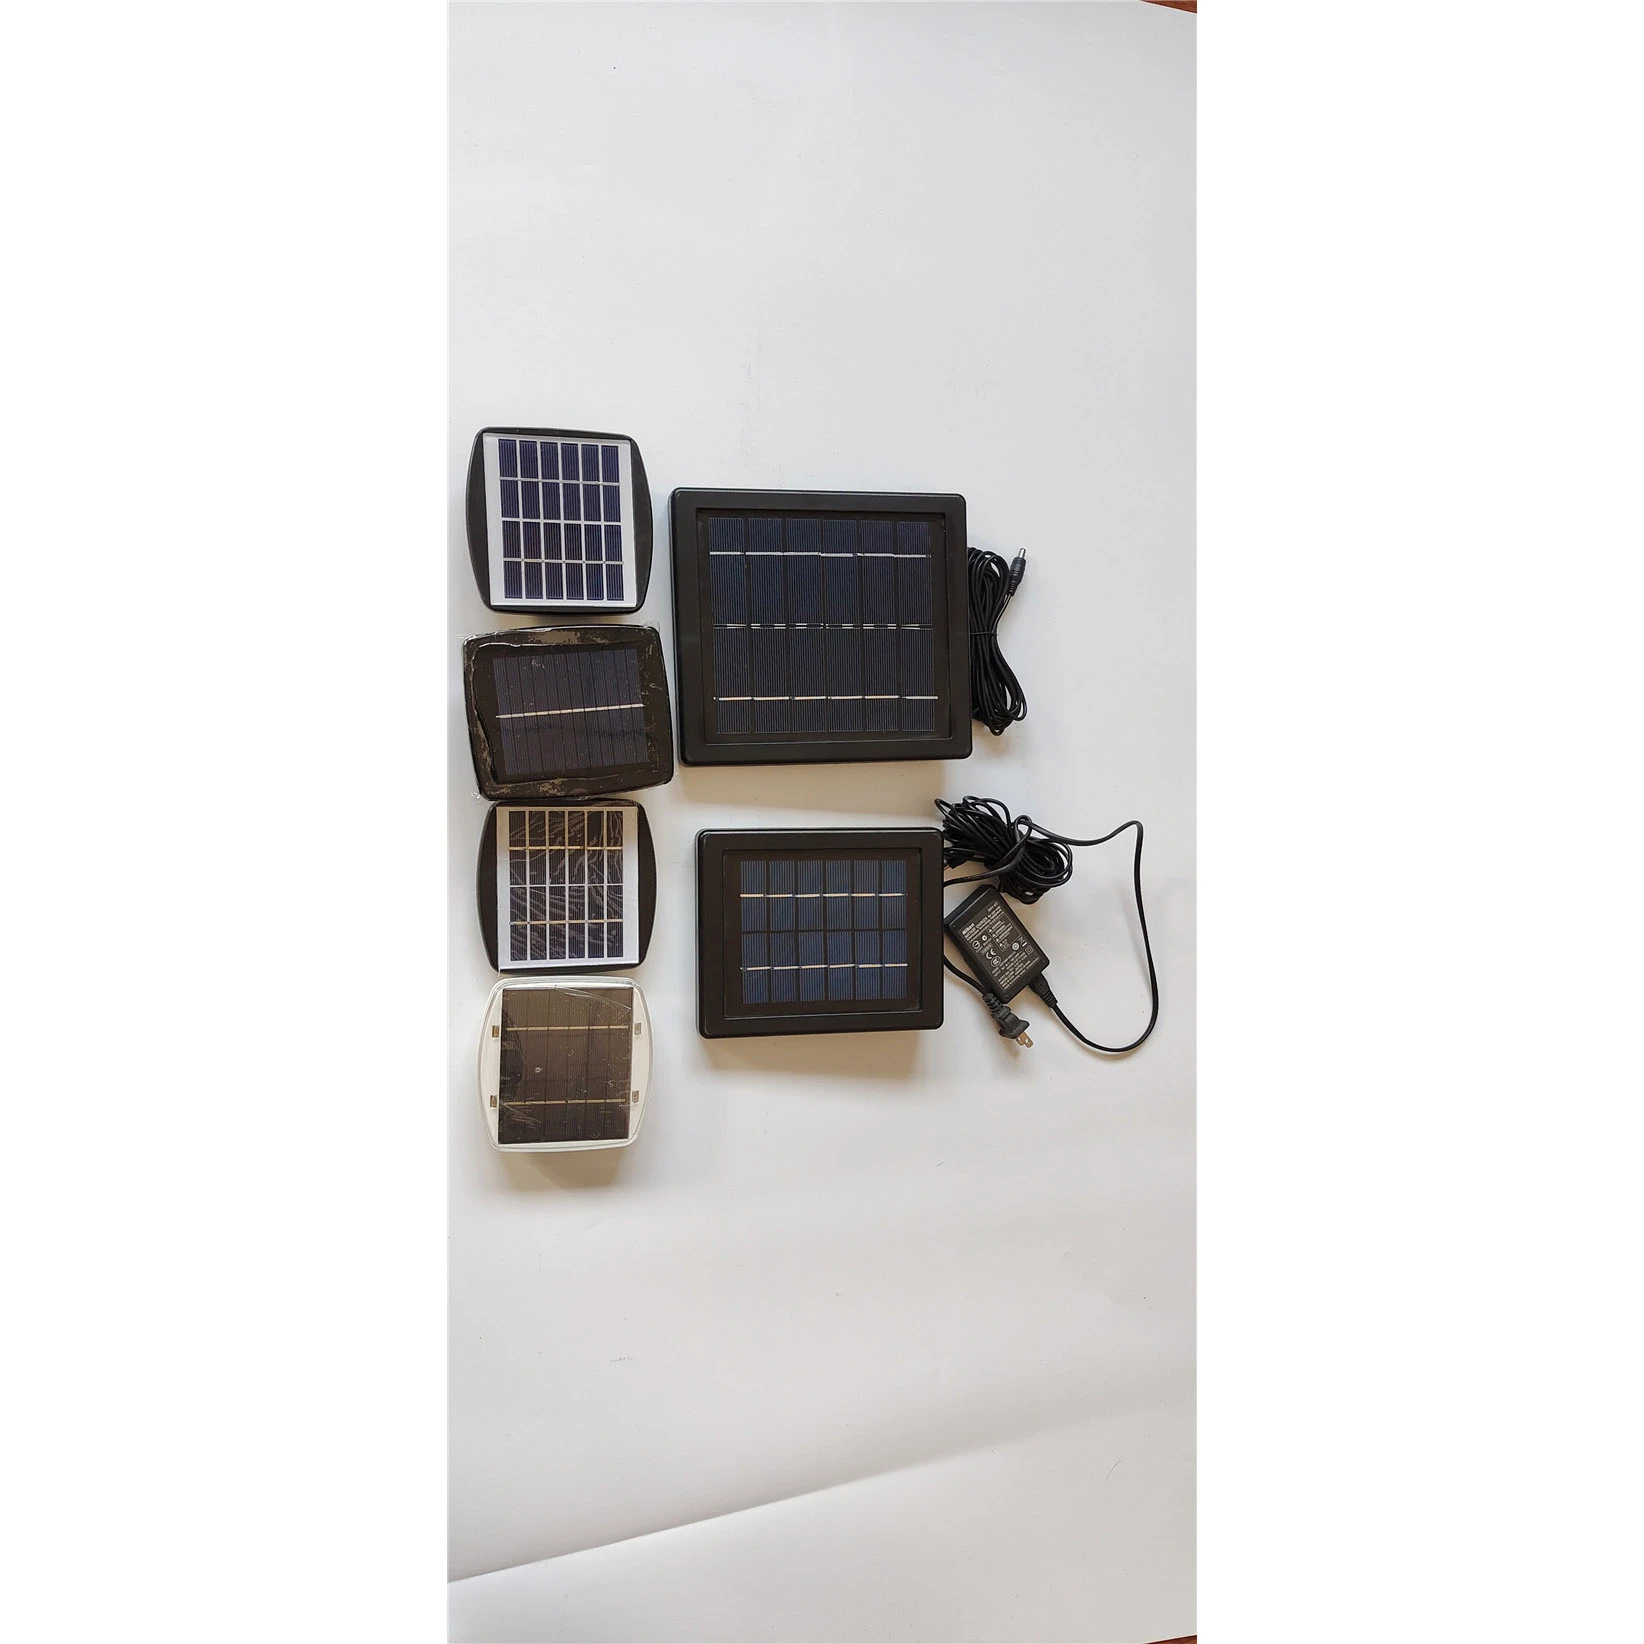 2020 latest product polycristalline solar panel floating solar panel